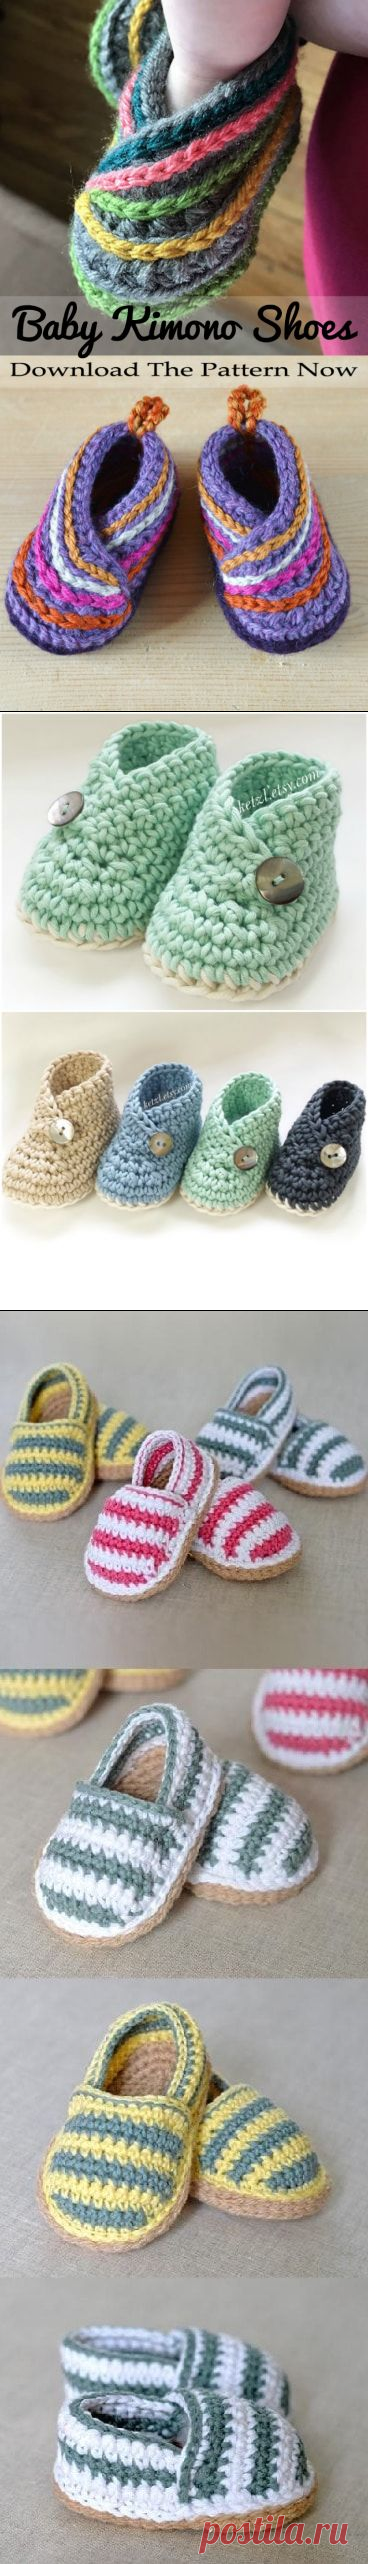 Crochet Kimono Baby Shoes Video Tutorial